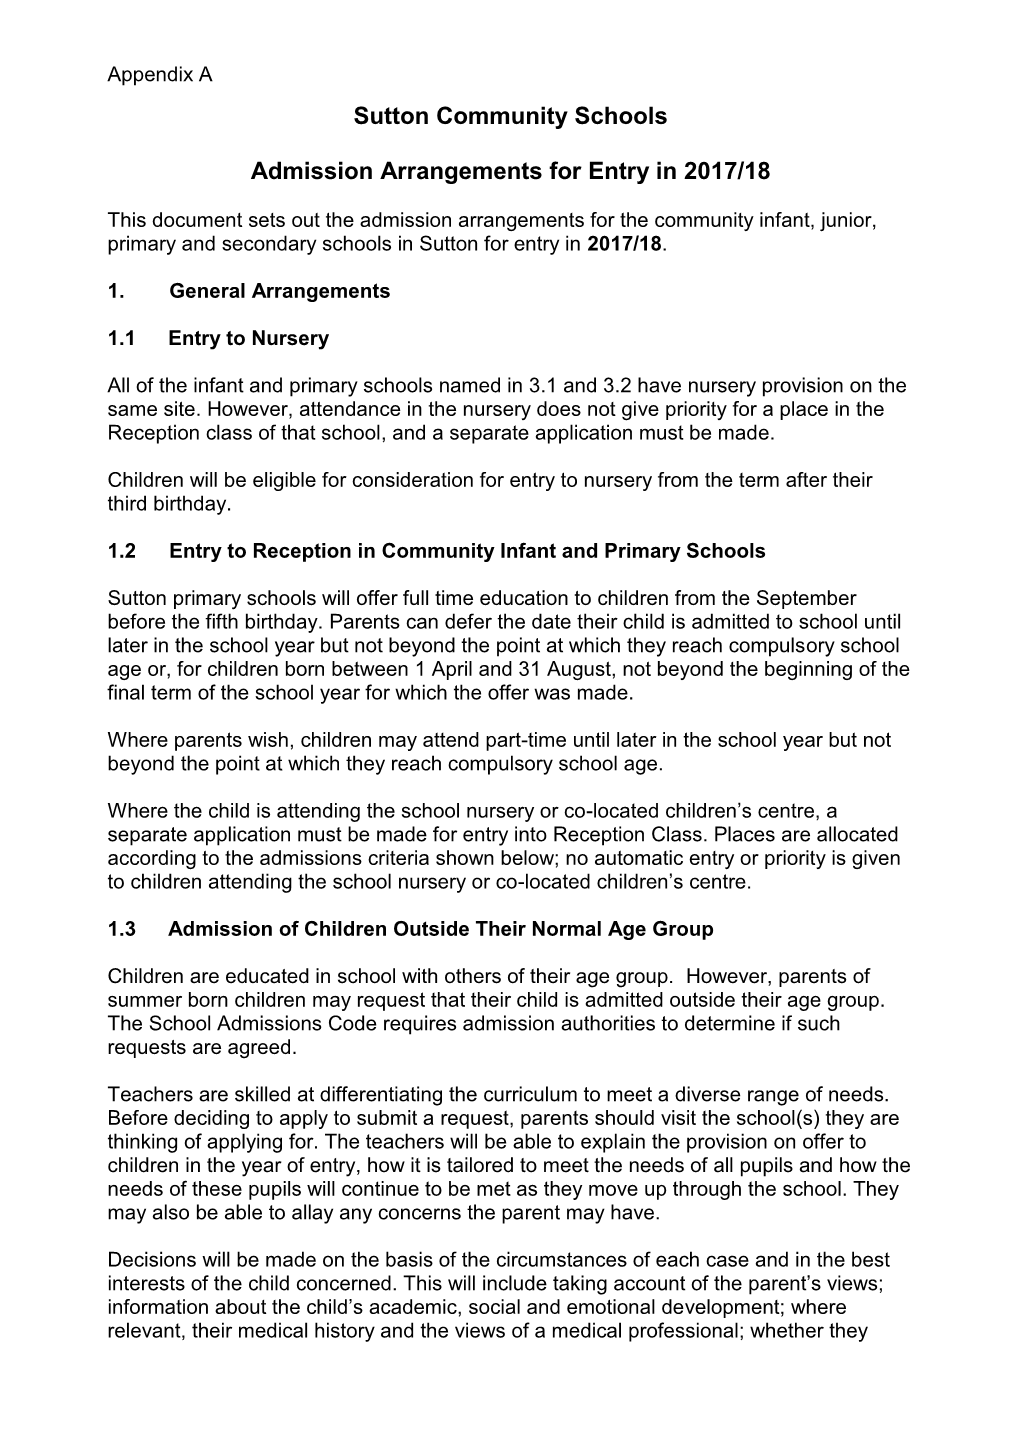 Sutton Community Schools Admission Arrangements for Entry in 2017/18